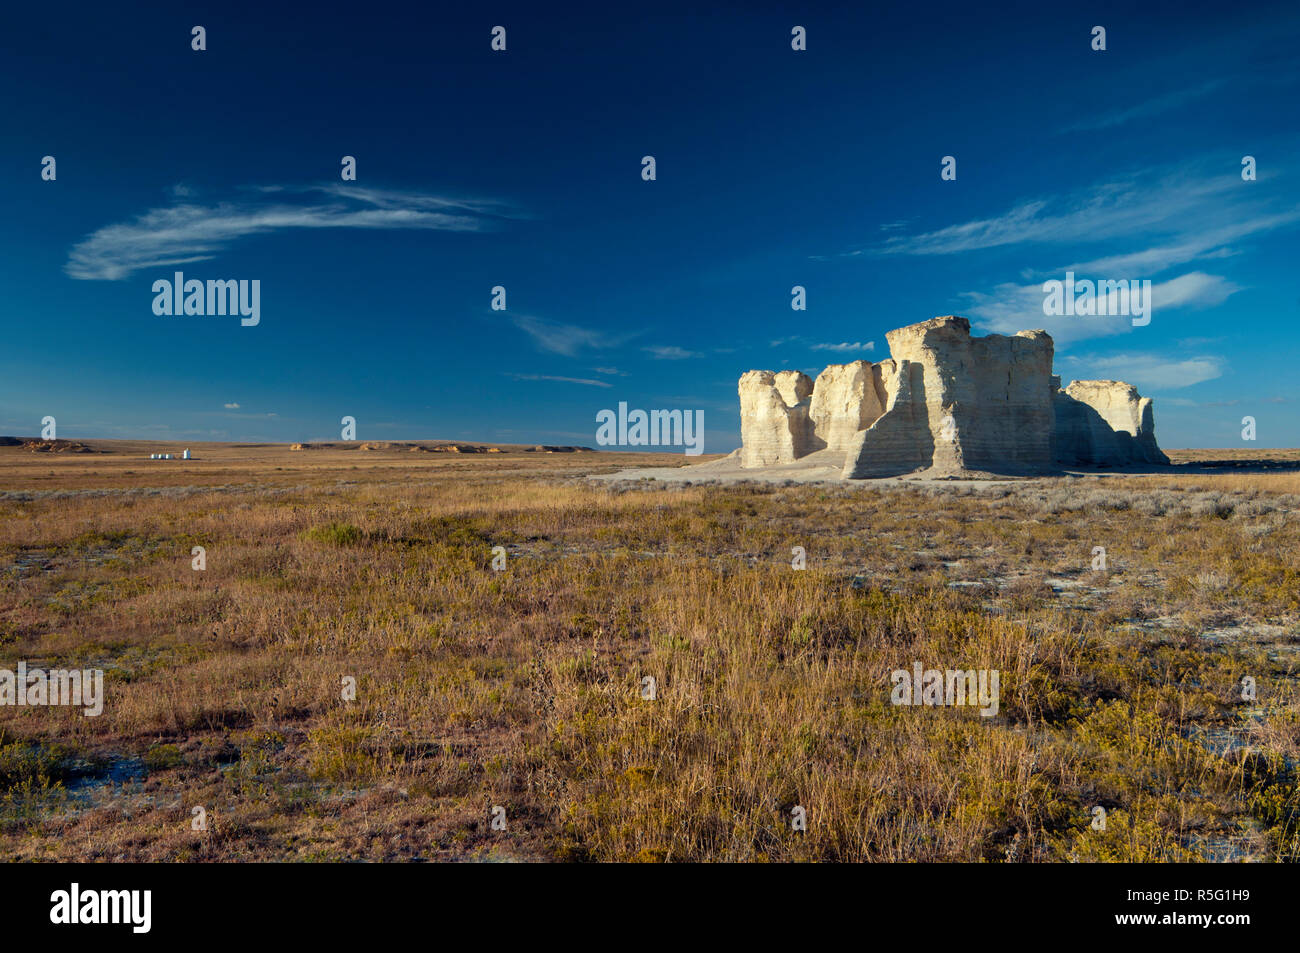 USA, Kansas, Gove County, Monument Rocks, Chalk Pyramids, Sedimentary Formations Stock Photo